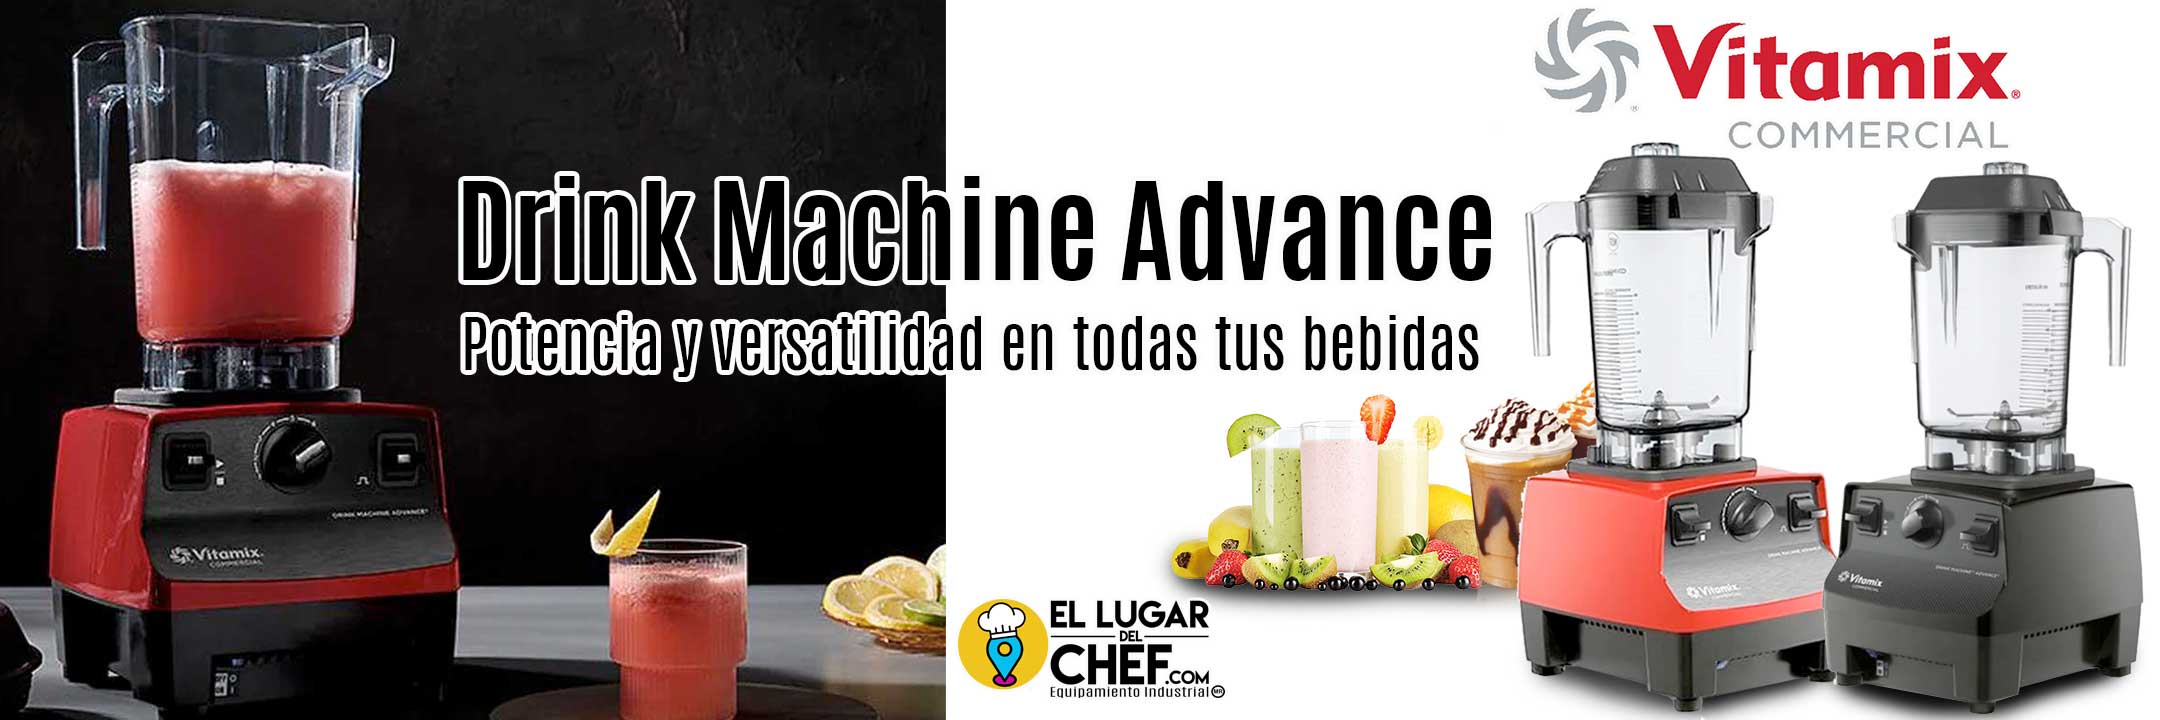 Licuadora vitamix drink machine advance